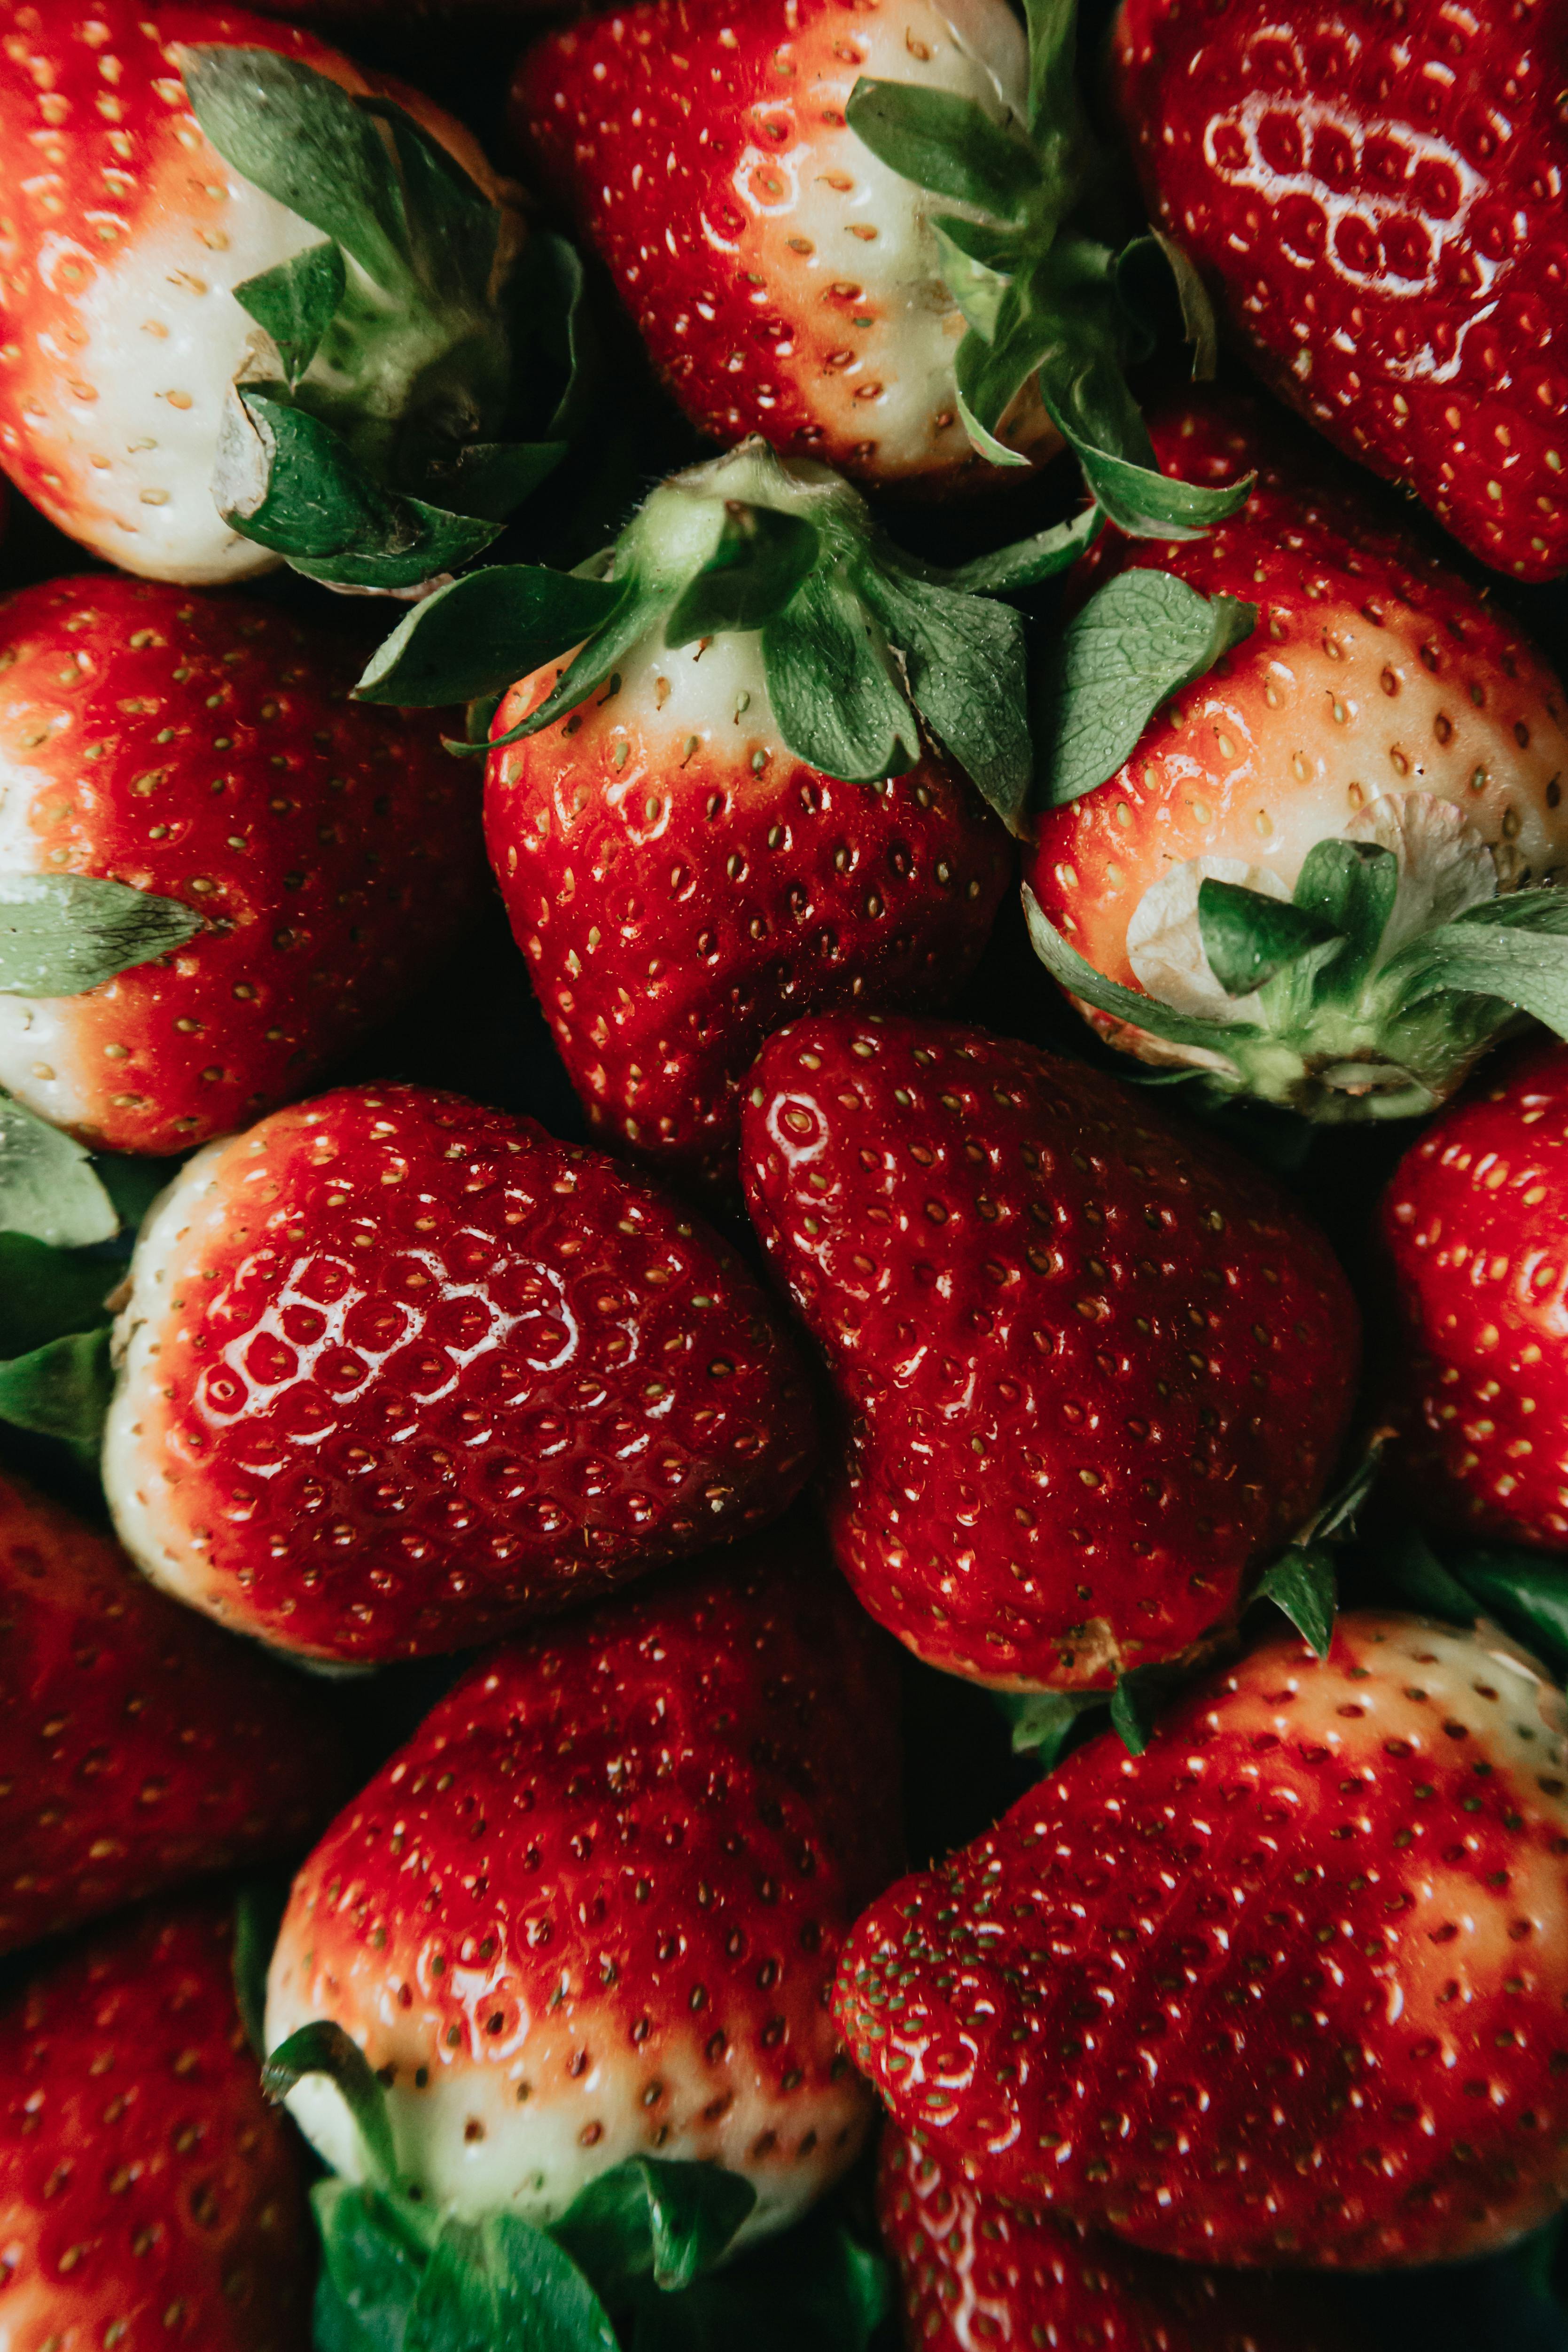 118374 Strawberry Wallpaper Images Stock Photos  Vectors  Shutterstock